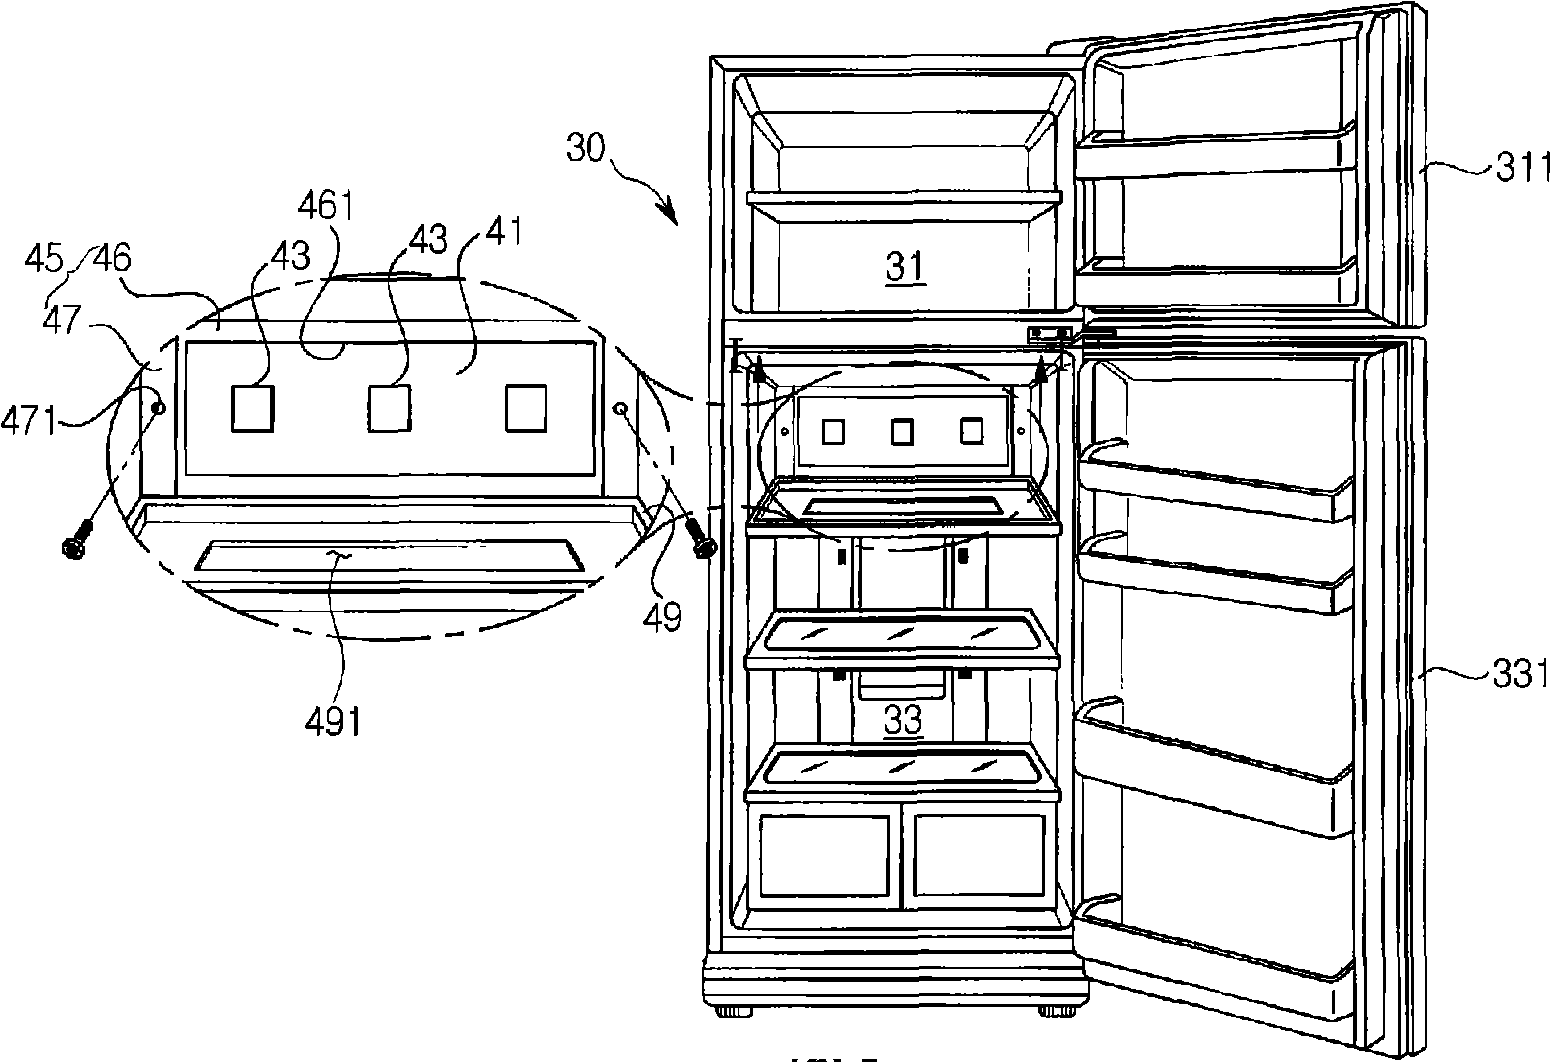 Refrigerator and lighting apparatus thereof